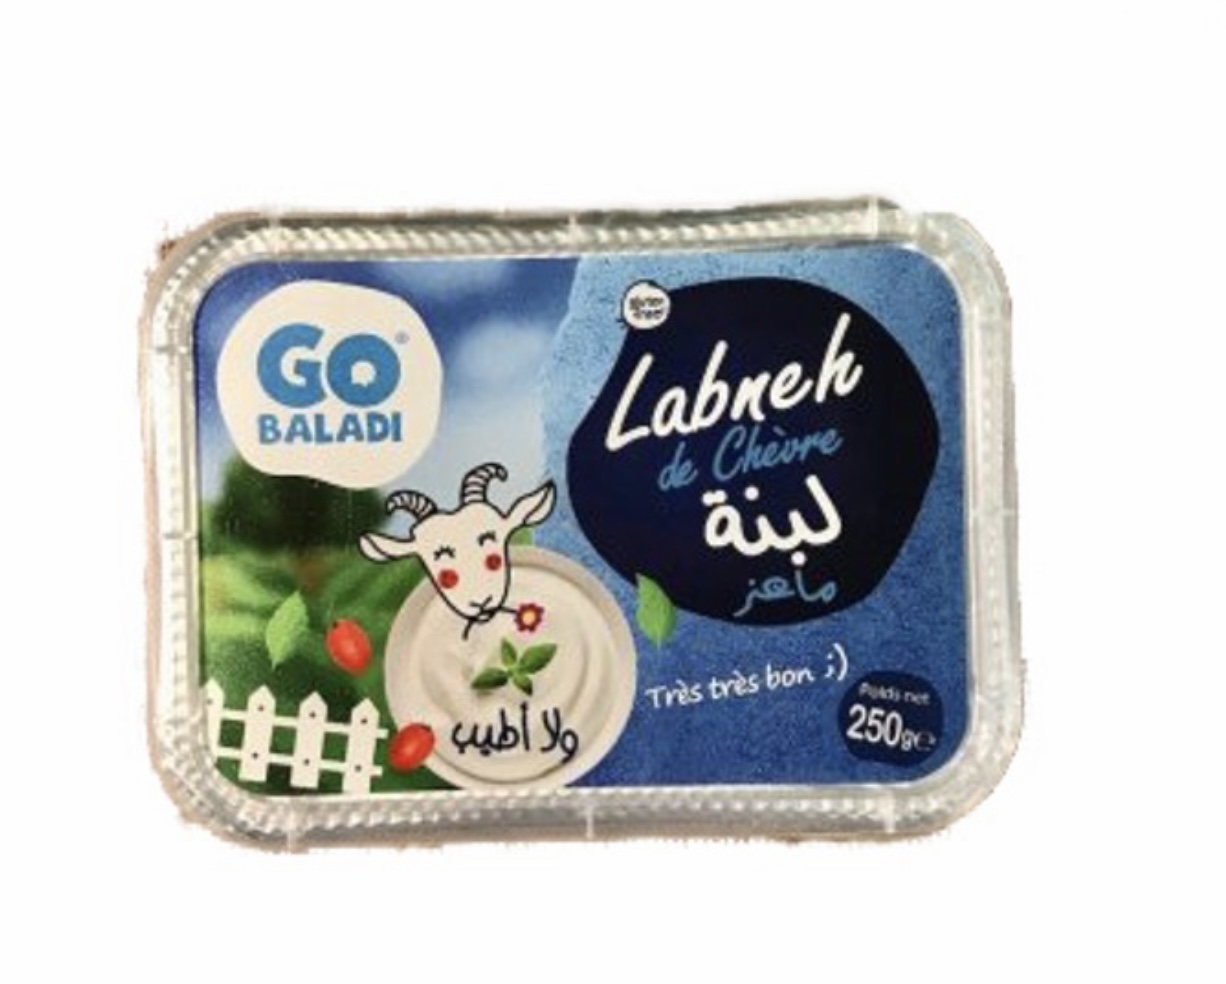 Go Baladi Creamy Goat Labneh 250g